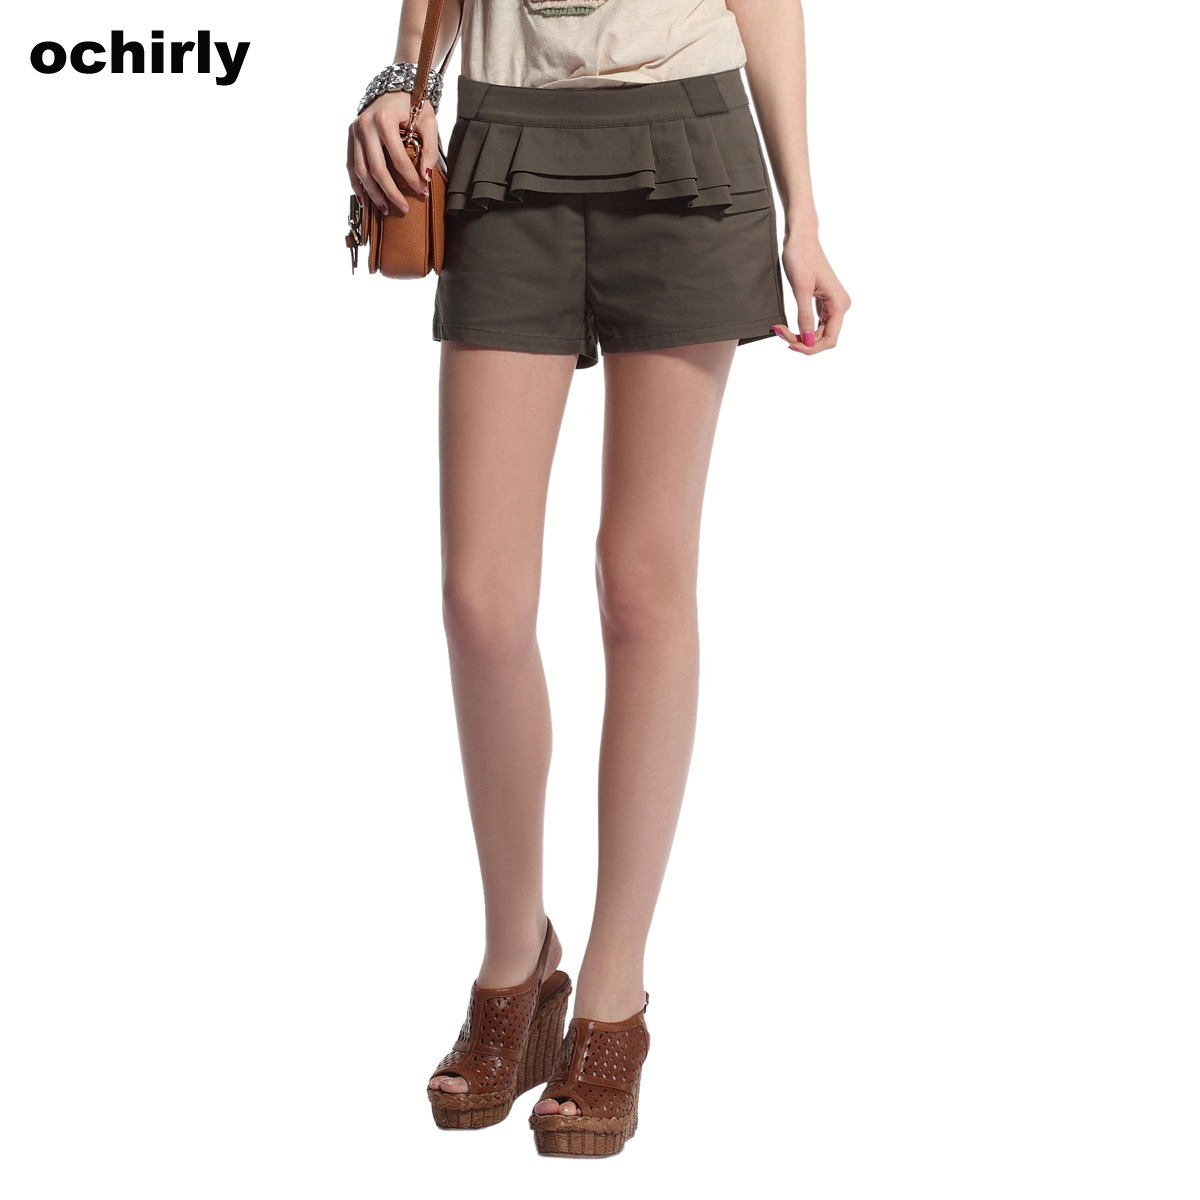 Ochirly OCHIRLY women's spring olive pocket shorts 1113062170